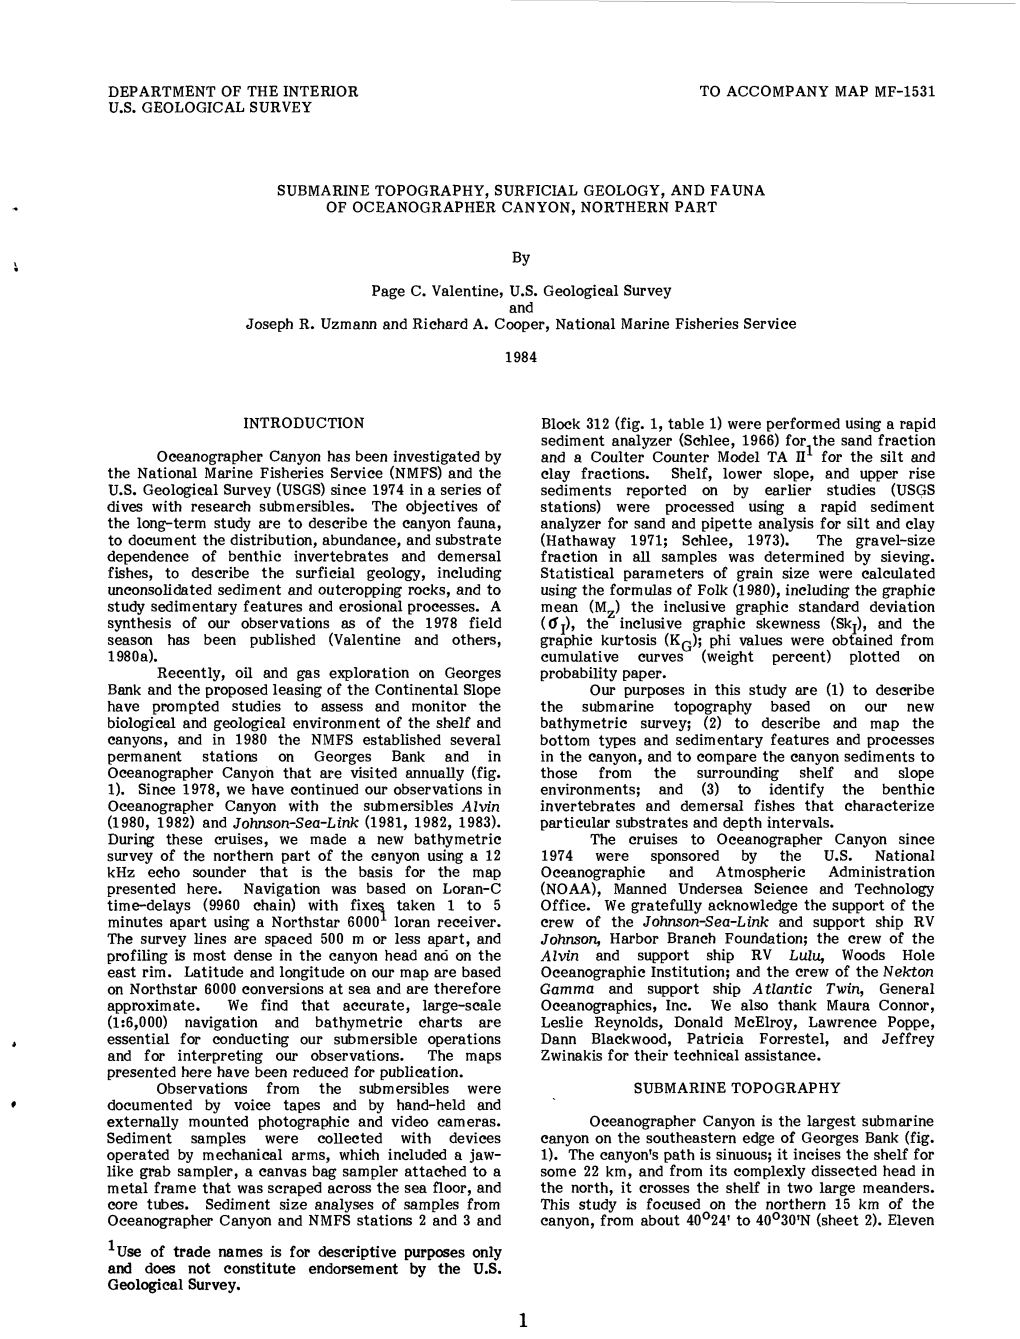 Page C. Valentine, U.S. Geological Survey and Joseph R. Uzmann and Richard A